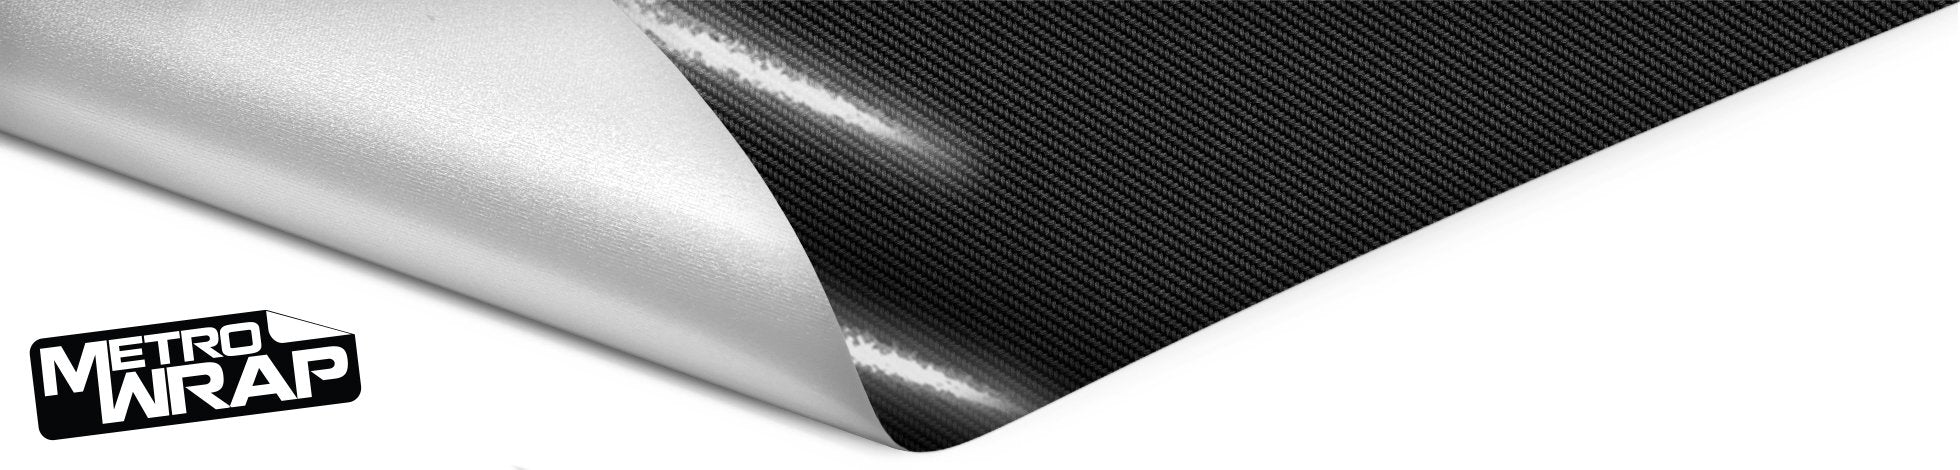 metro carbon fiber vinyl wrap